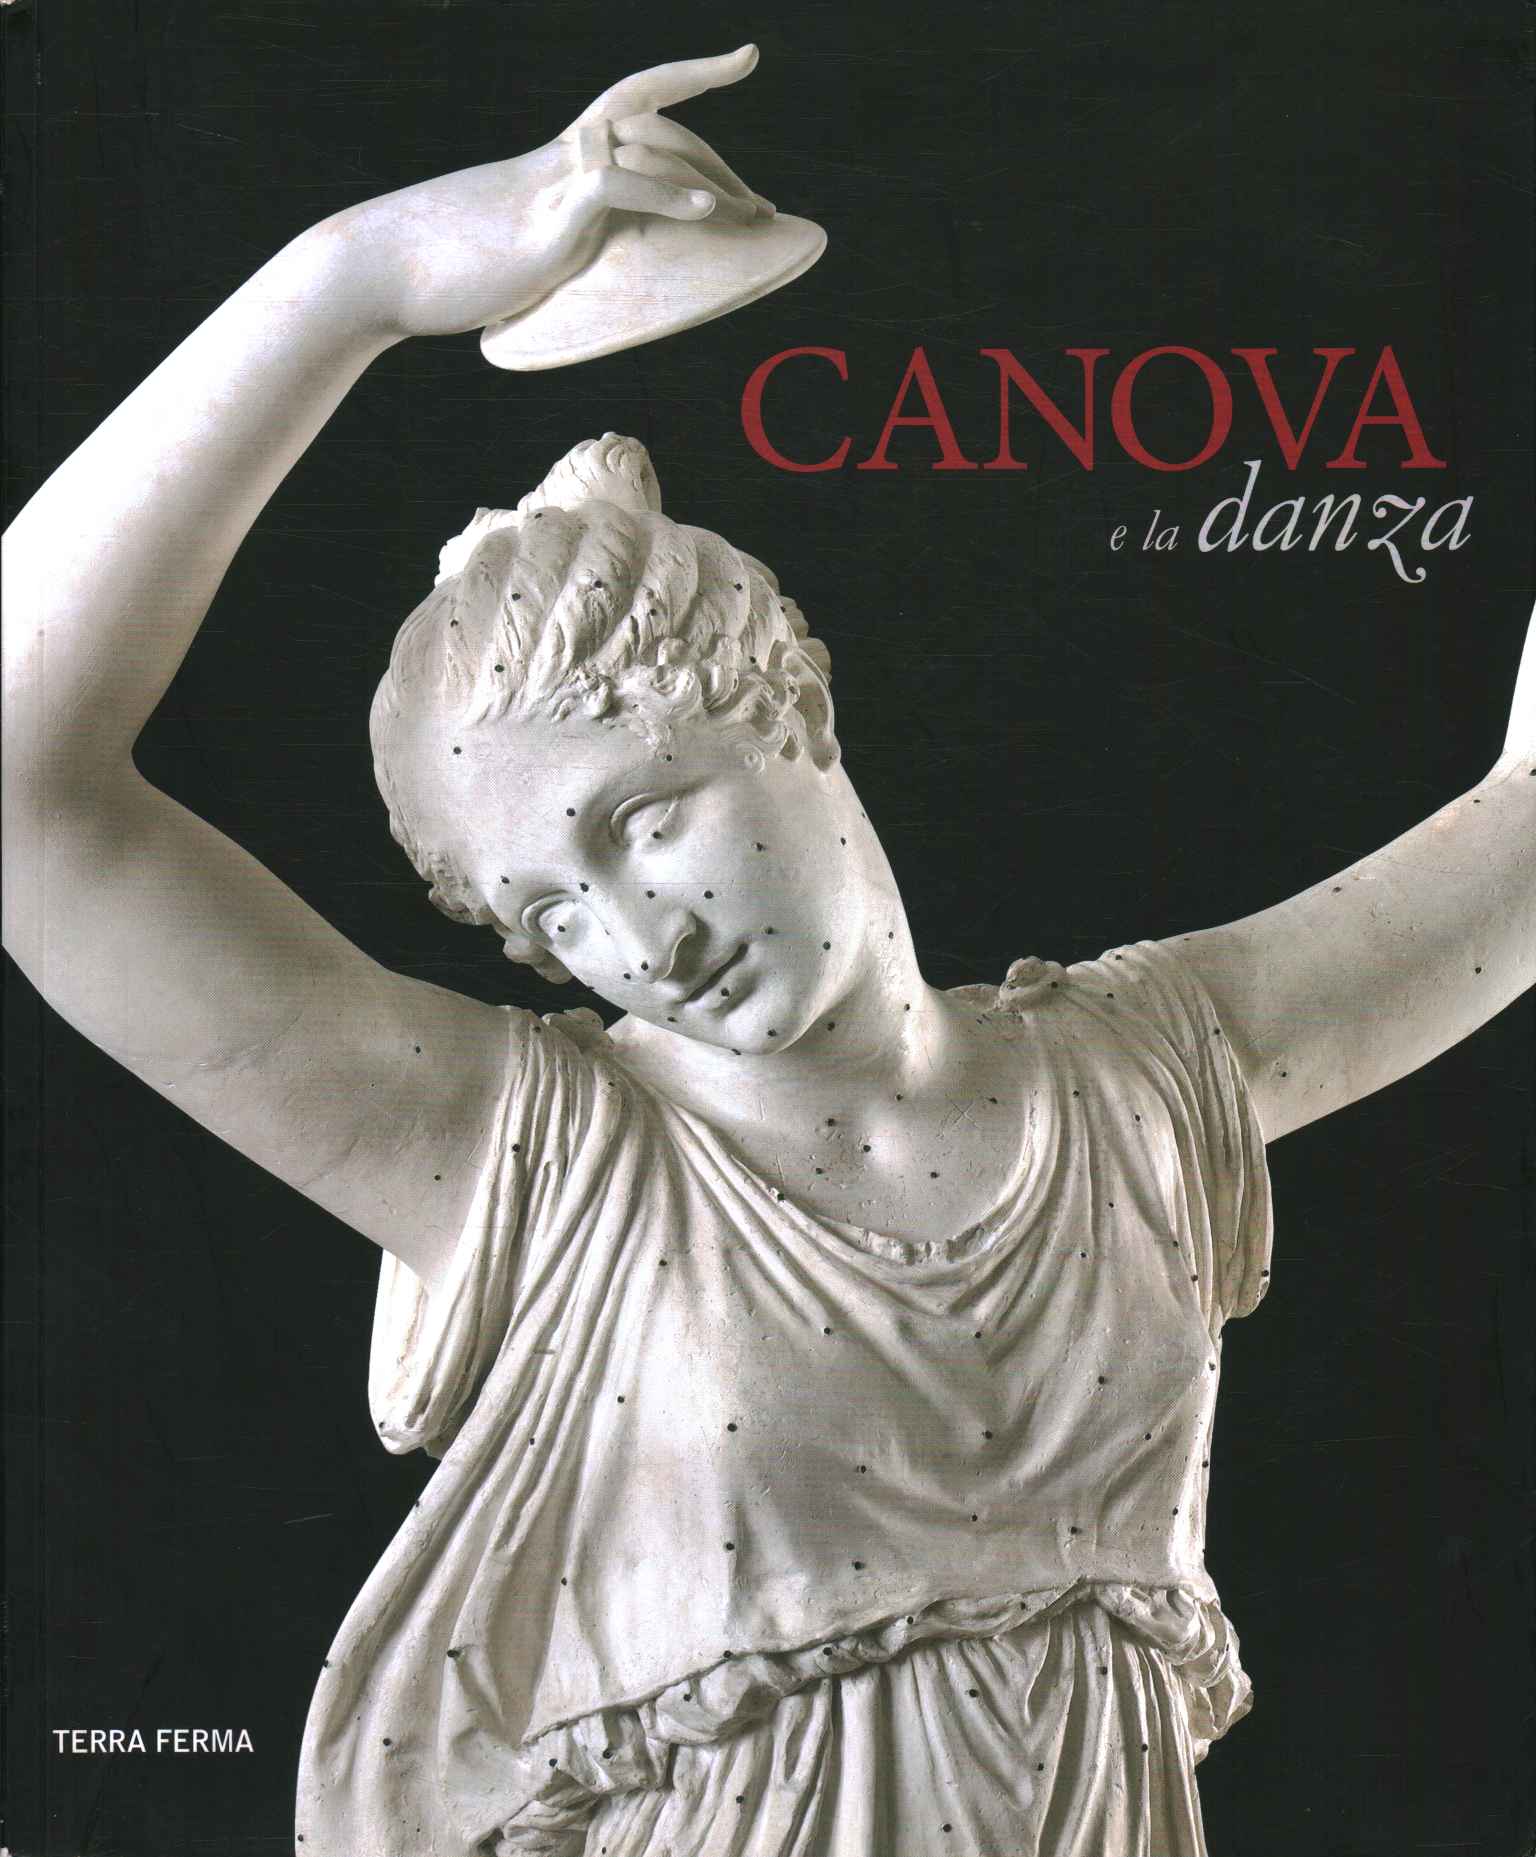 Canova and dance